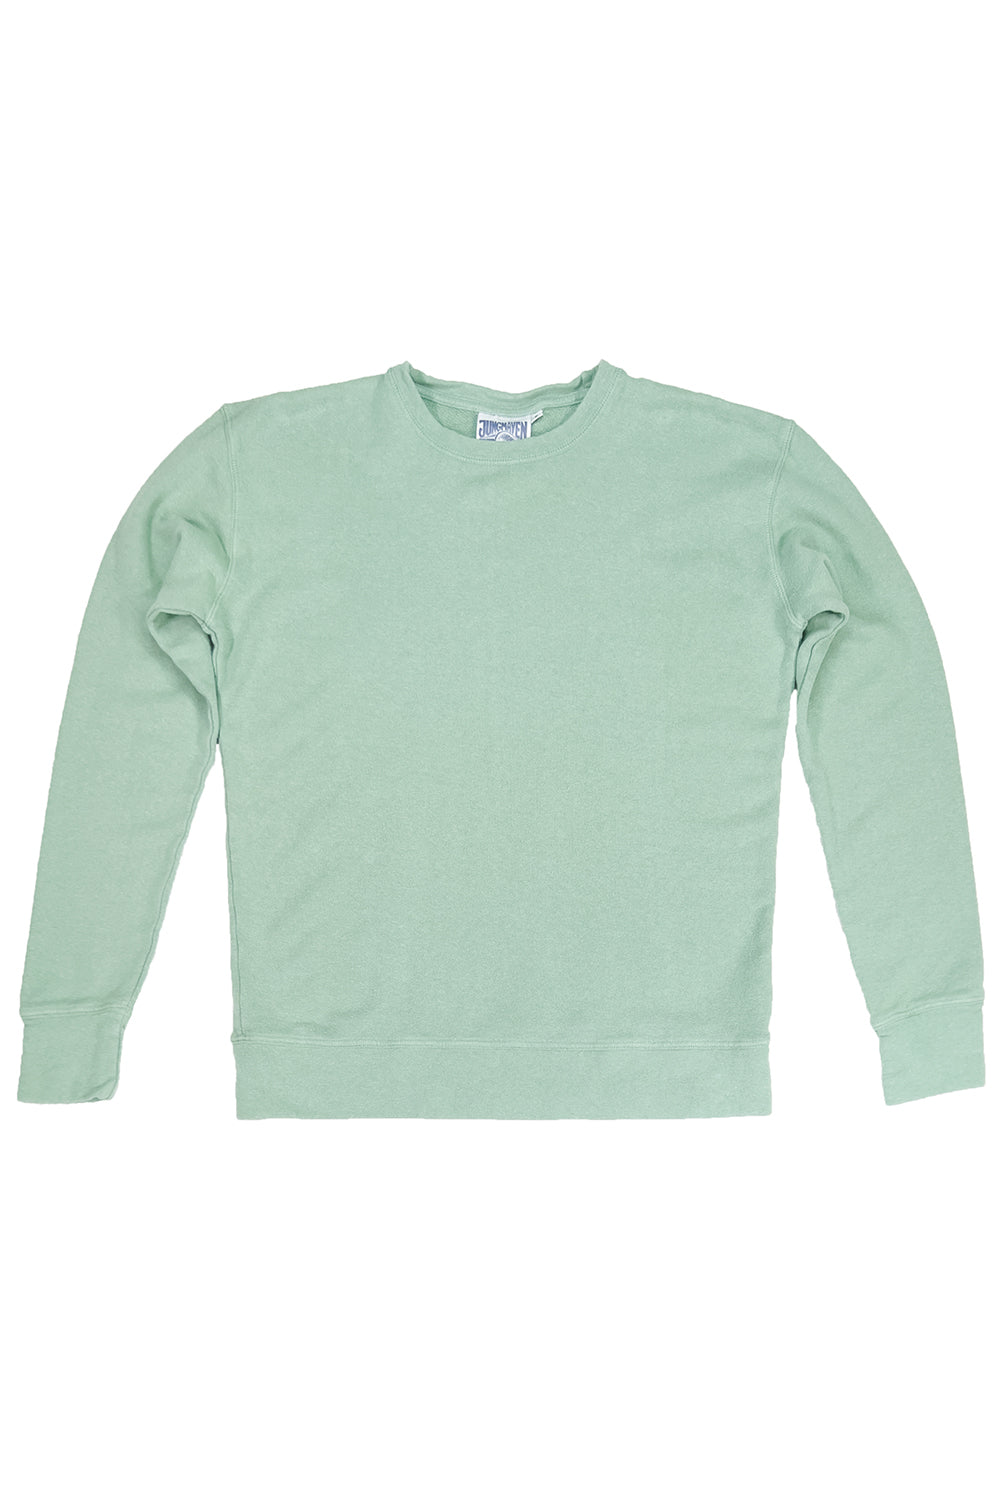 | Hemp Jungmaven Clothing Sweatshirt Tahoe